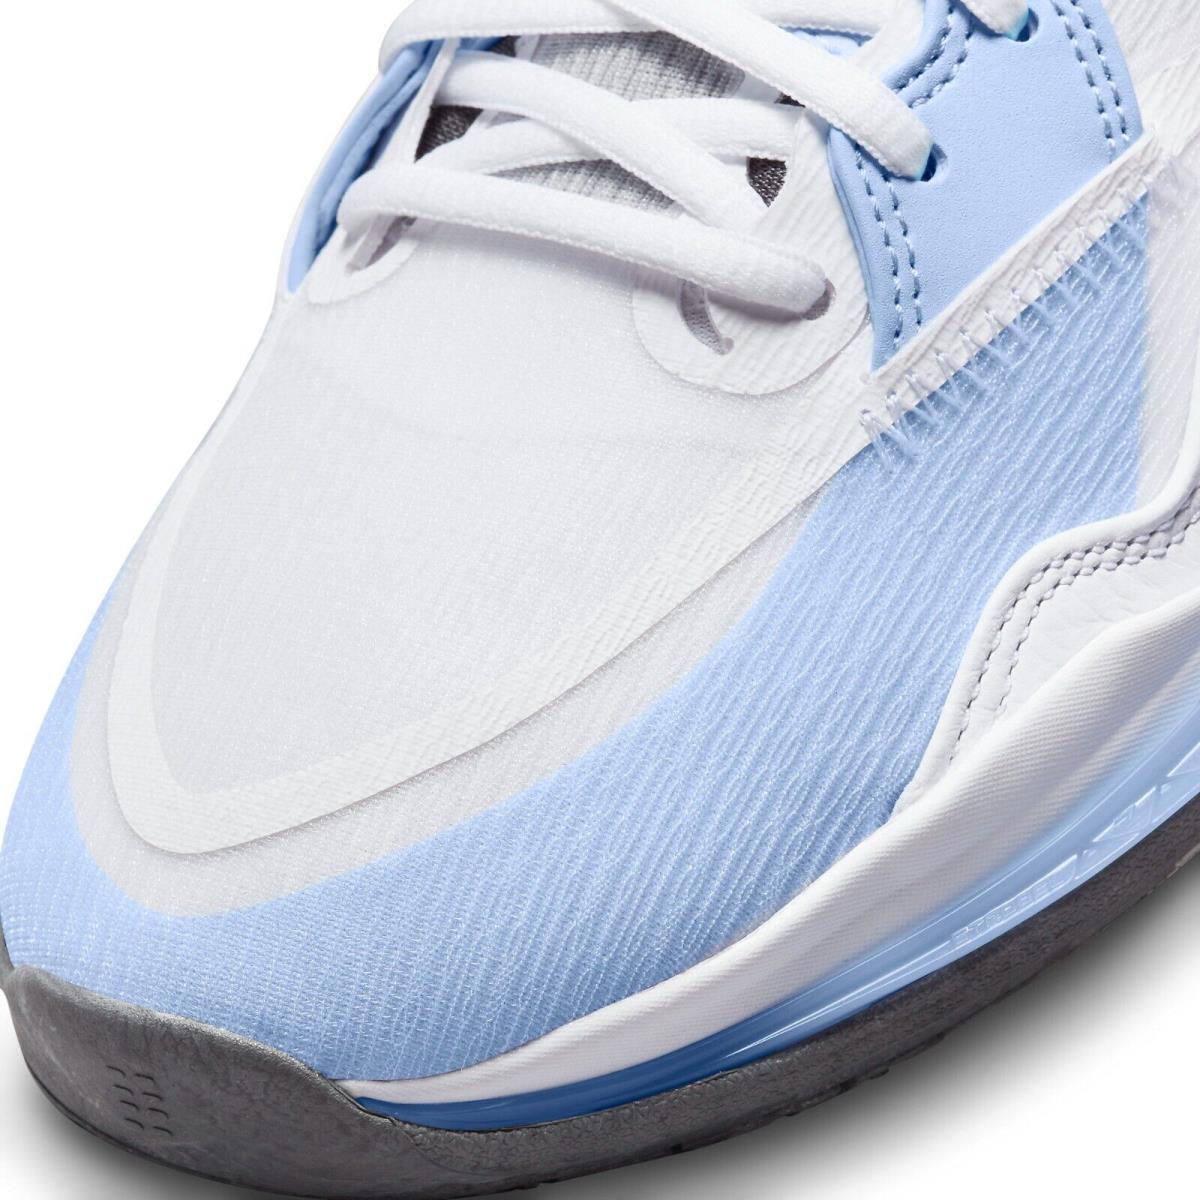 Nike shoes Kyrie Infinity - White/Light Marine/Medium Blue/Iron Grey 6